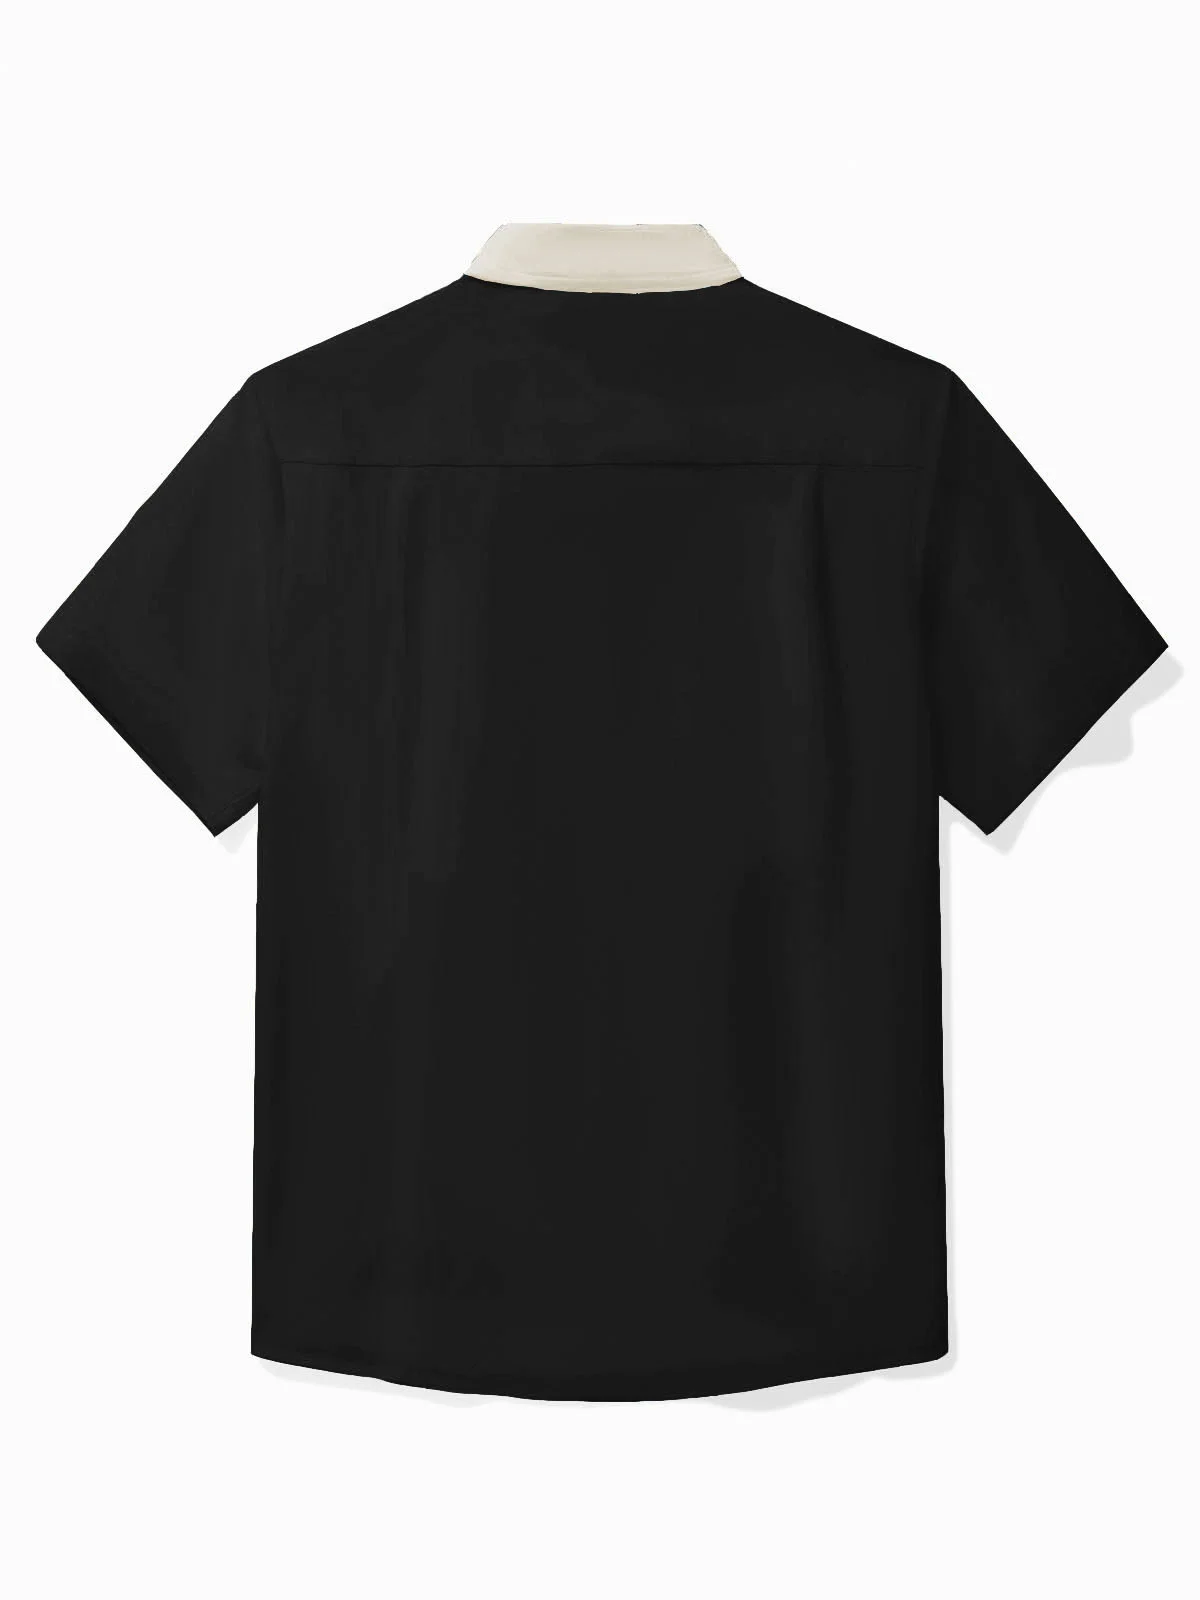 Royaura® 50's Vintage Men's Bowling Shirt Mid-Century Atomic Rhombus Geometric Art Pocket Camp Shirt Big Tall